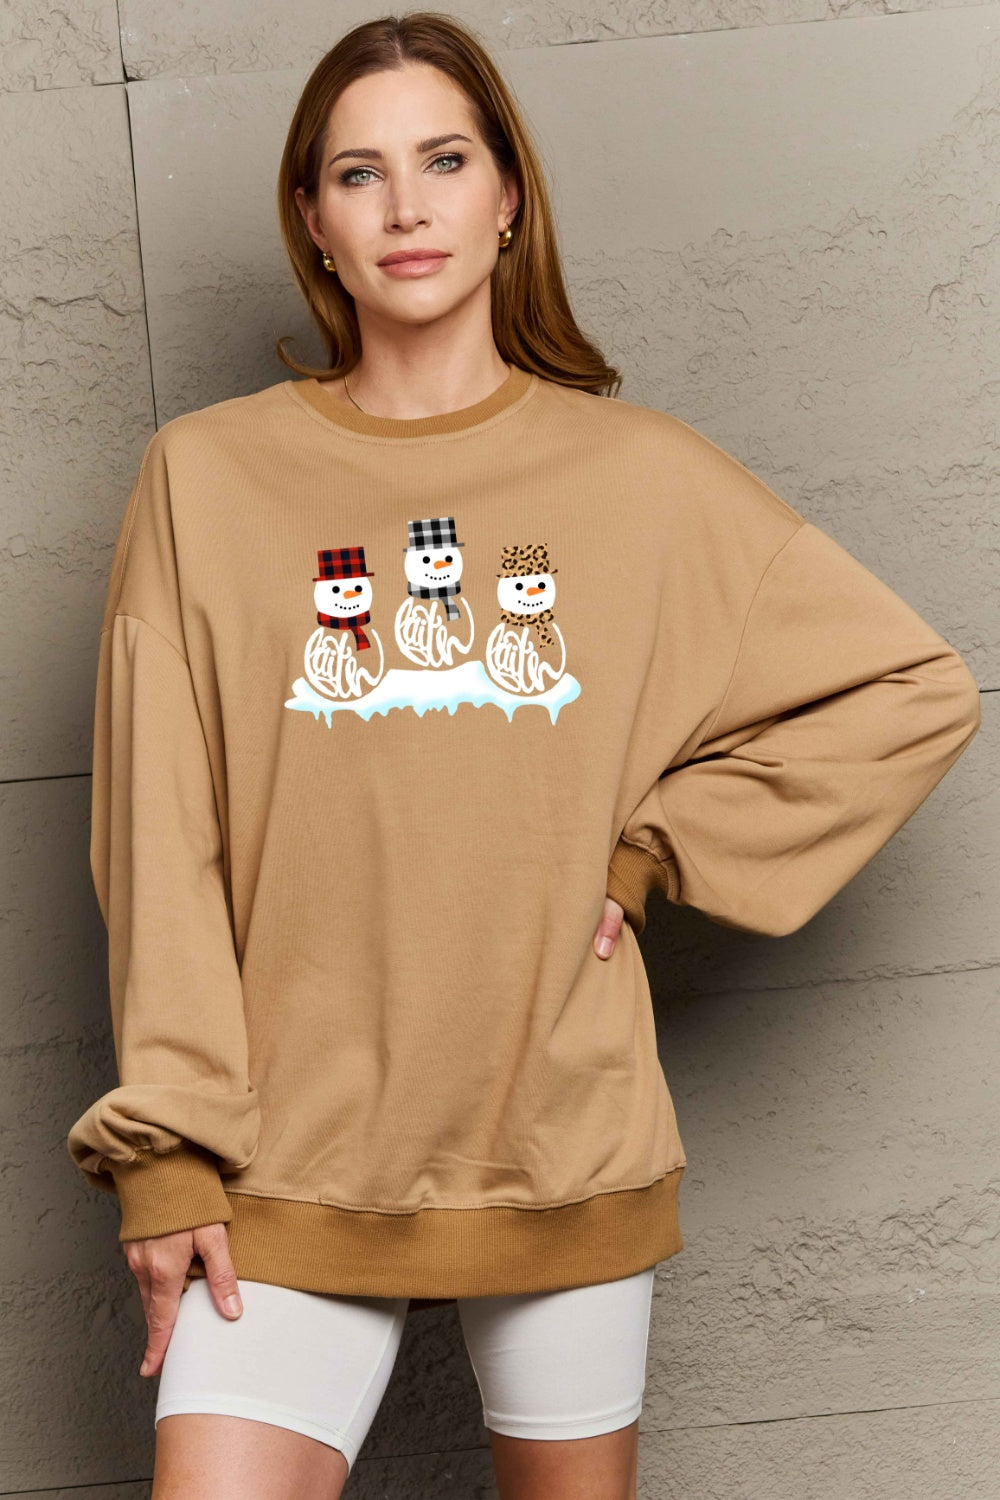 Simply Love Full Size Snowmen Graphic Sweatshirt